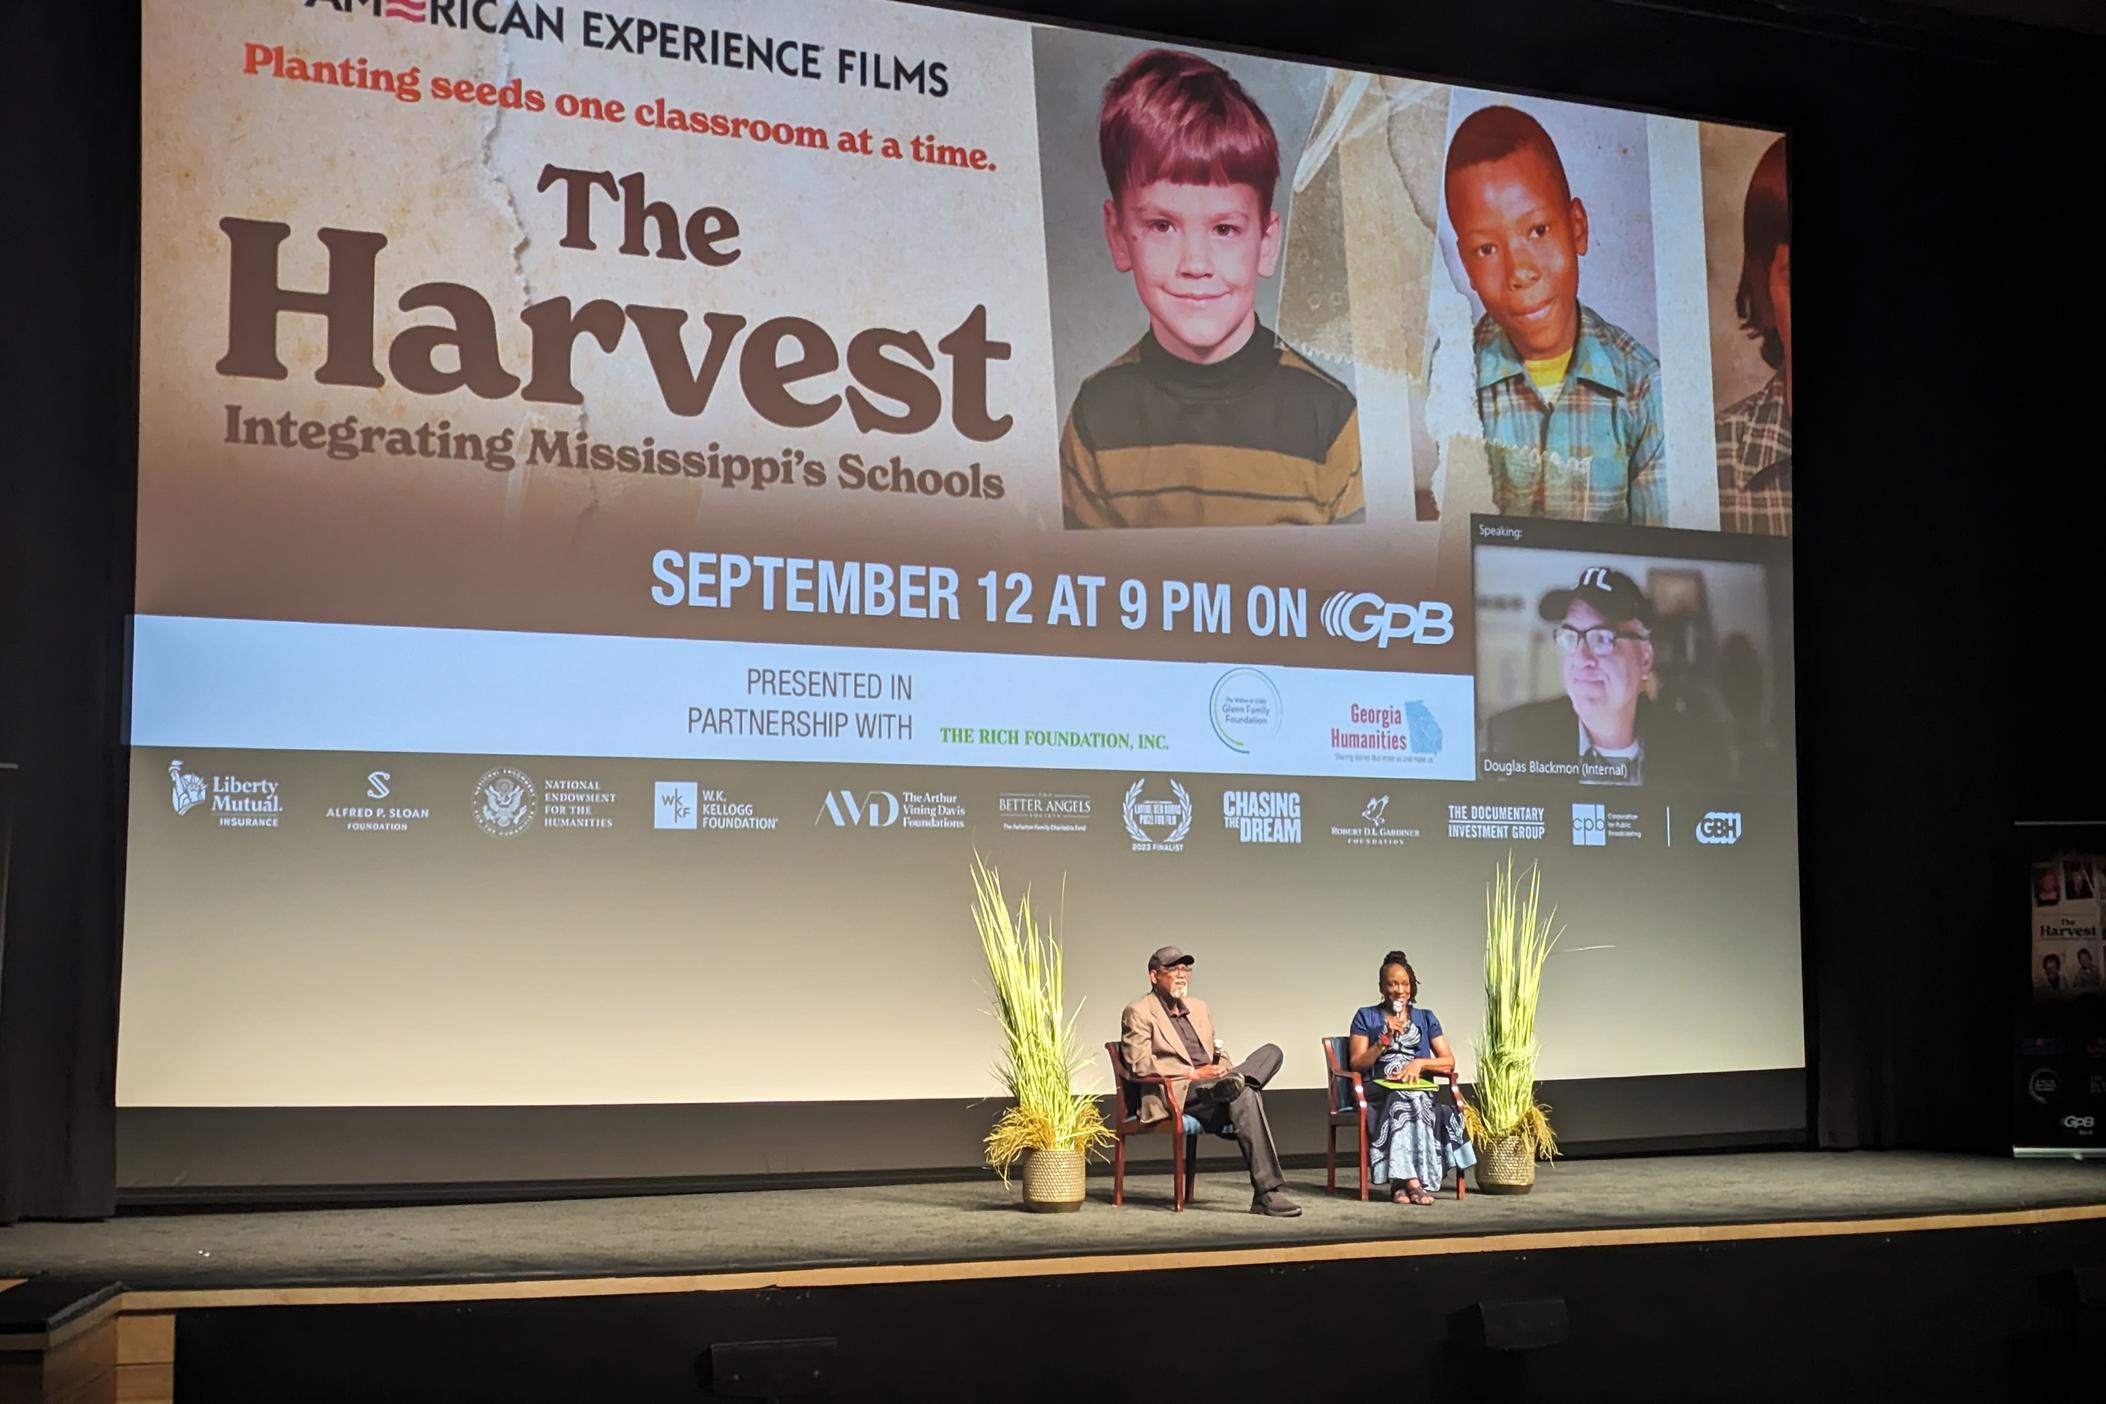 The harvest screening